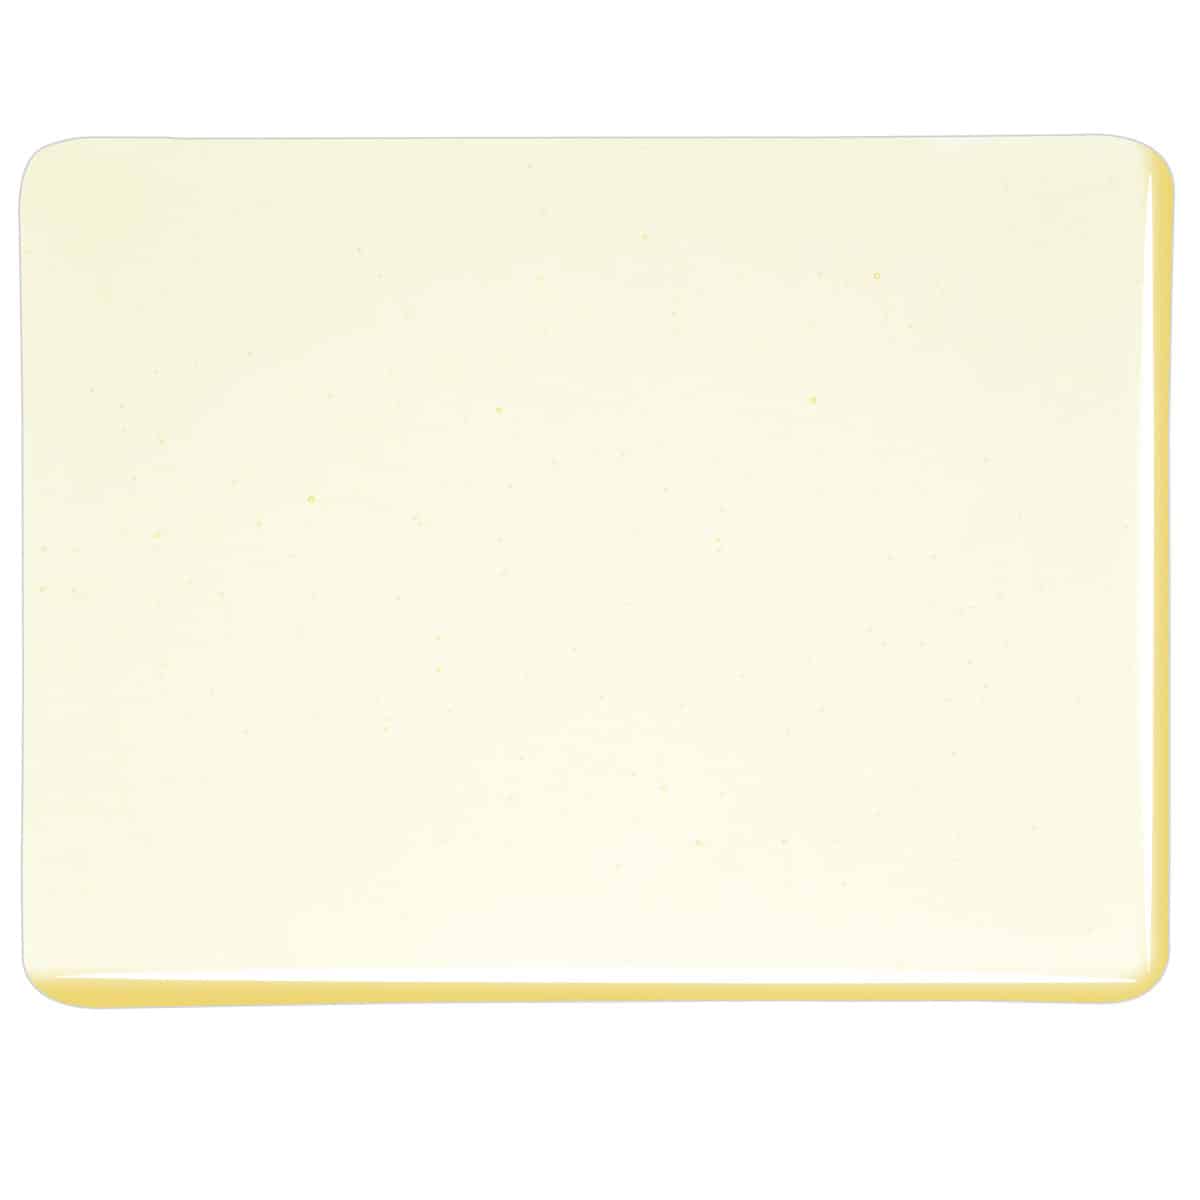 001820 Pale Yellow Tint transparent sheet glass swatch